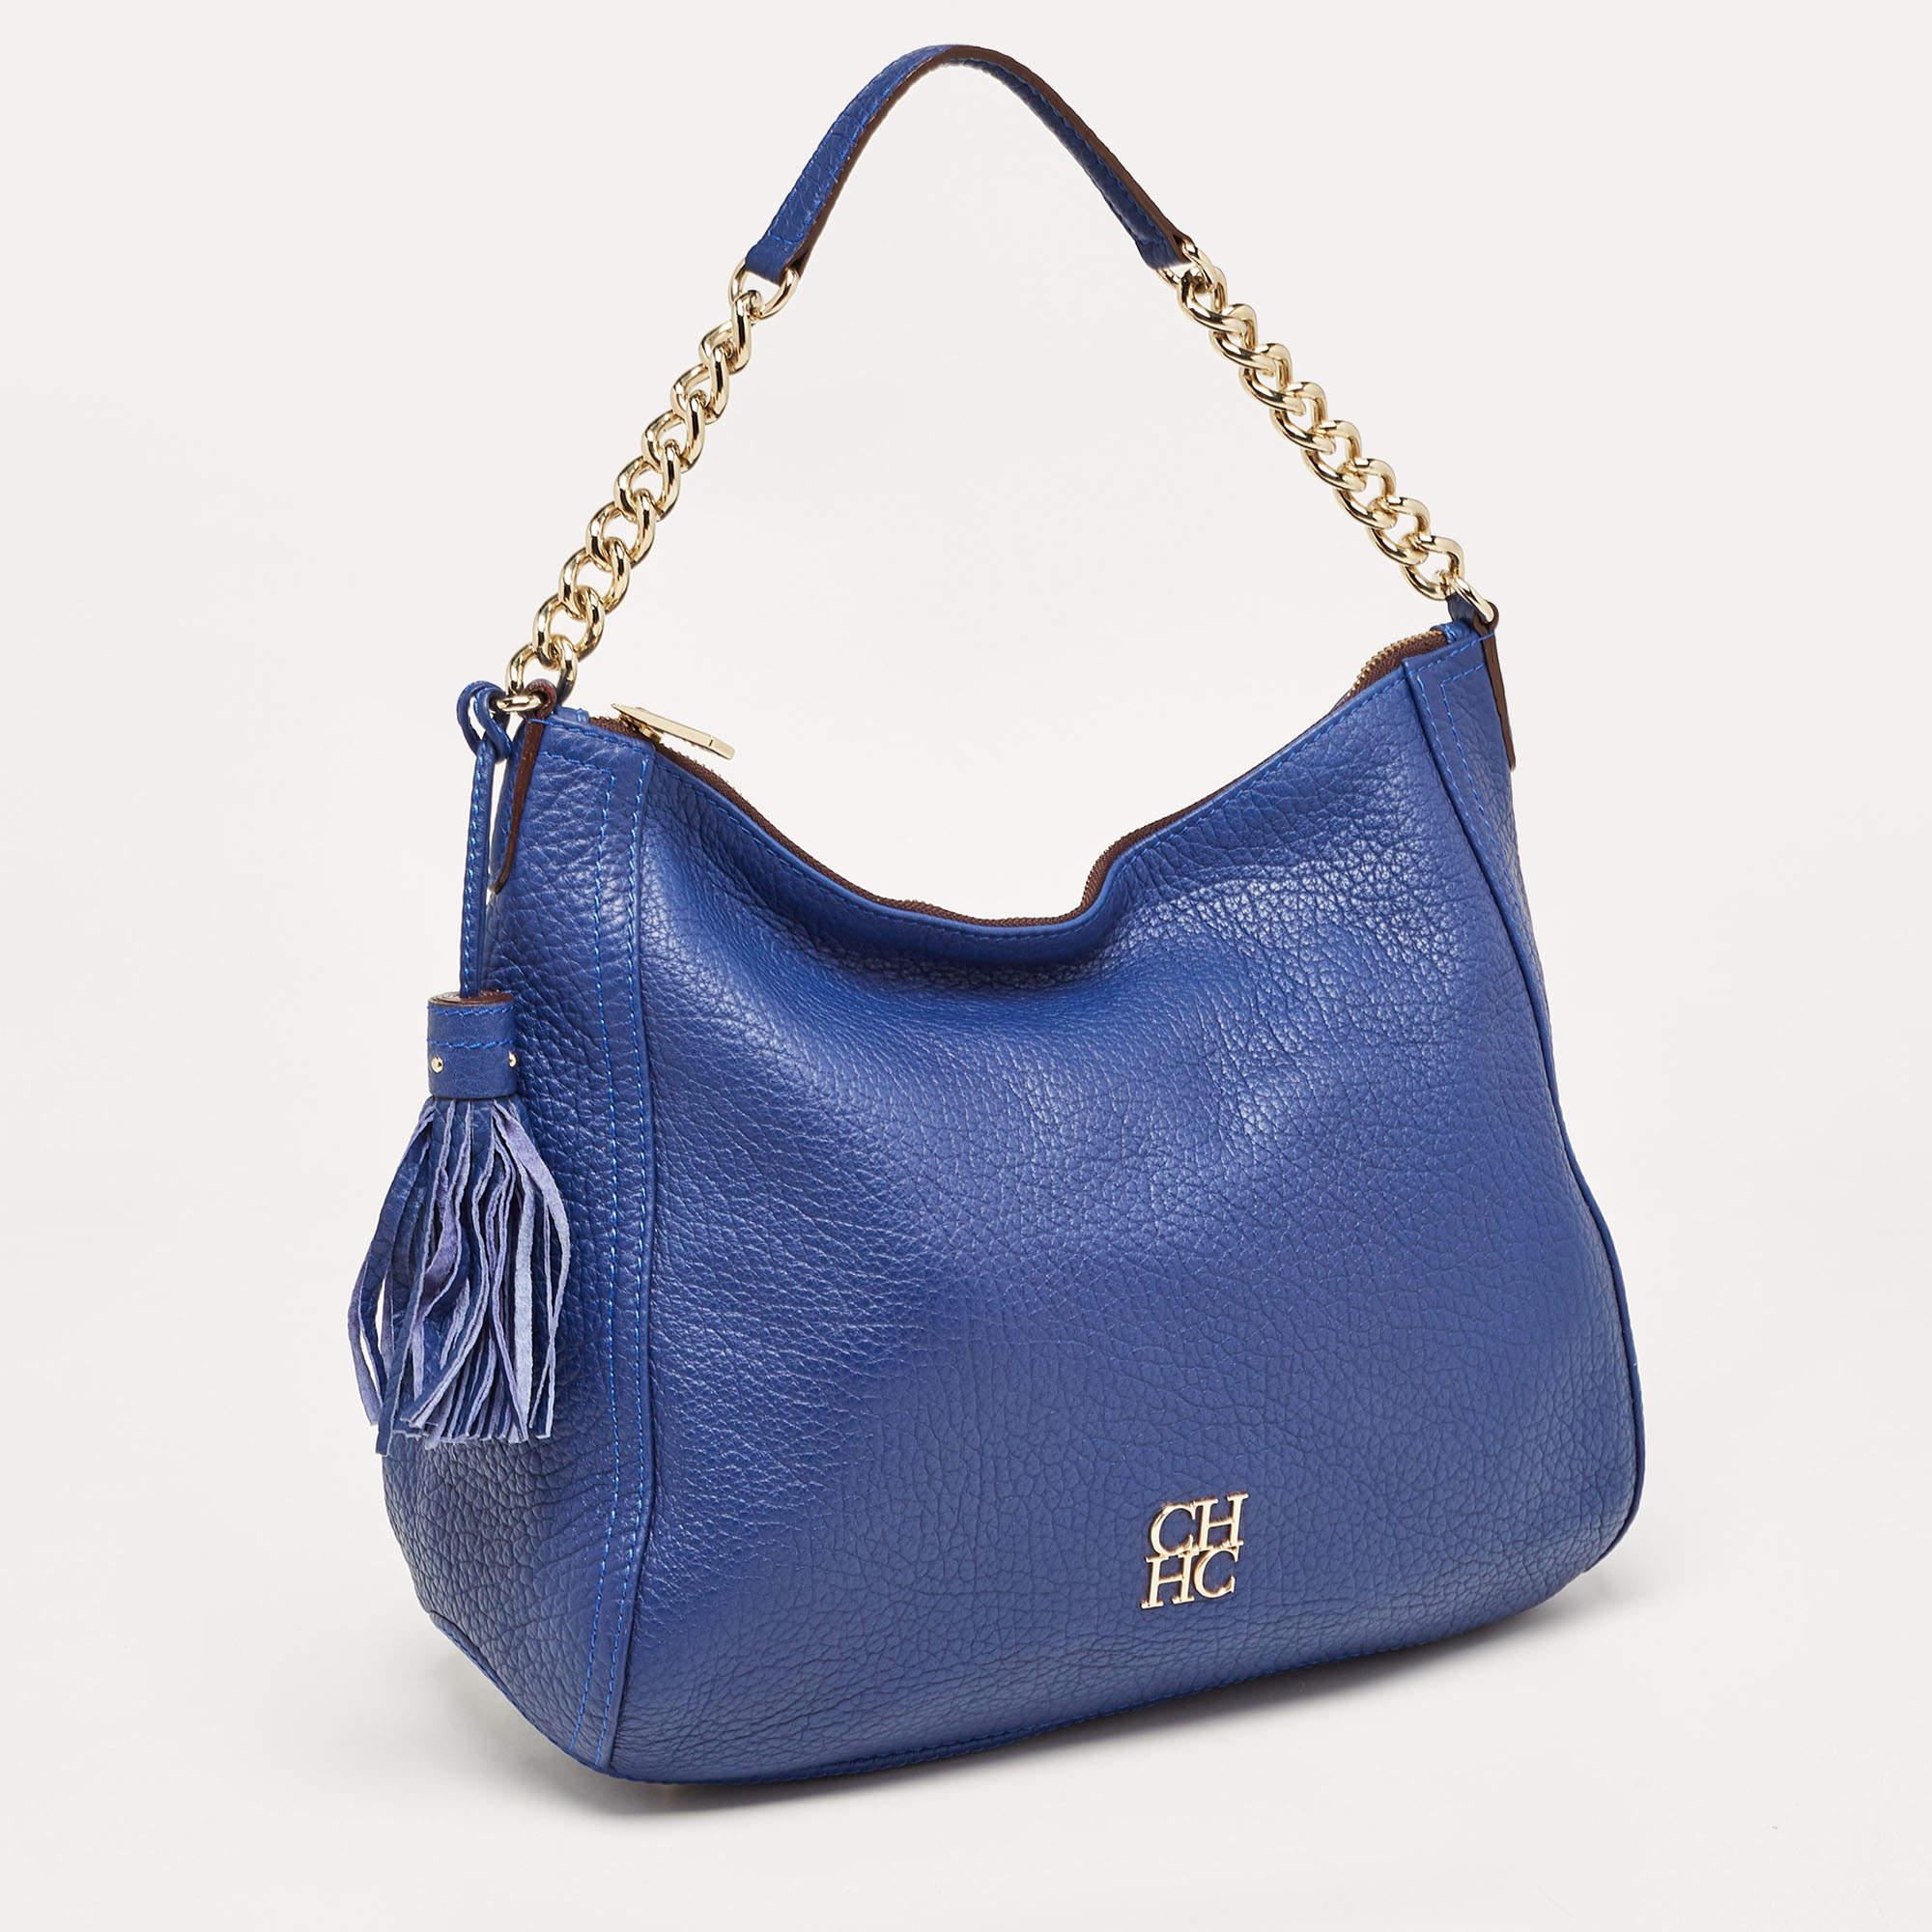 Carolina Herrera Blue Leather Chain Tassel Hobo 5